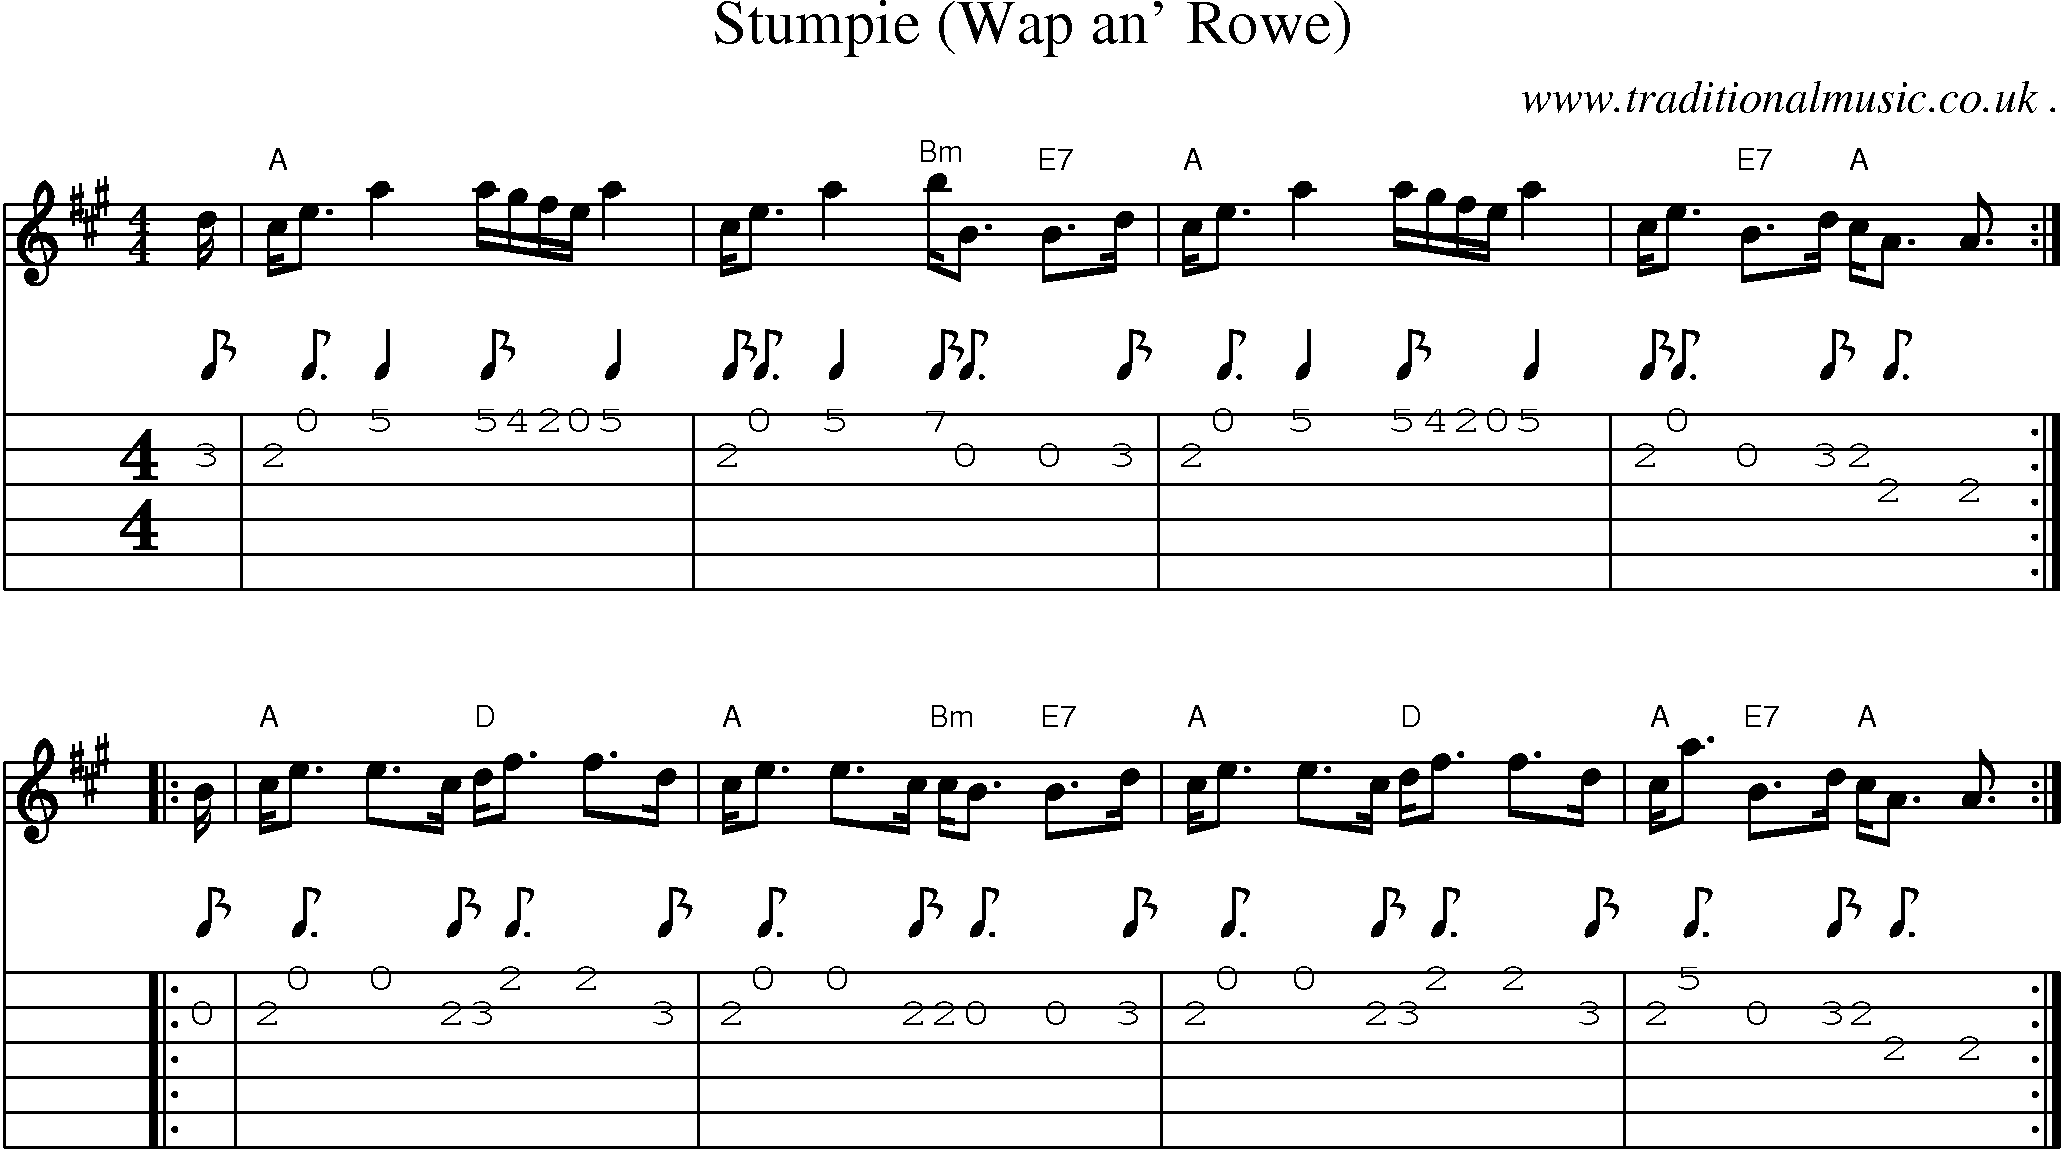 Sheet-music  score, Chords and Guitar Tabs for Stumpie Wap An Rowe